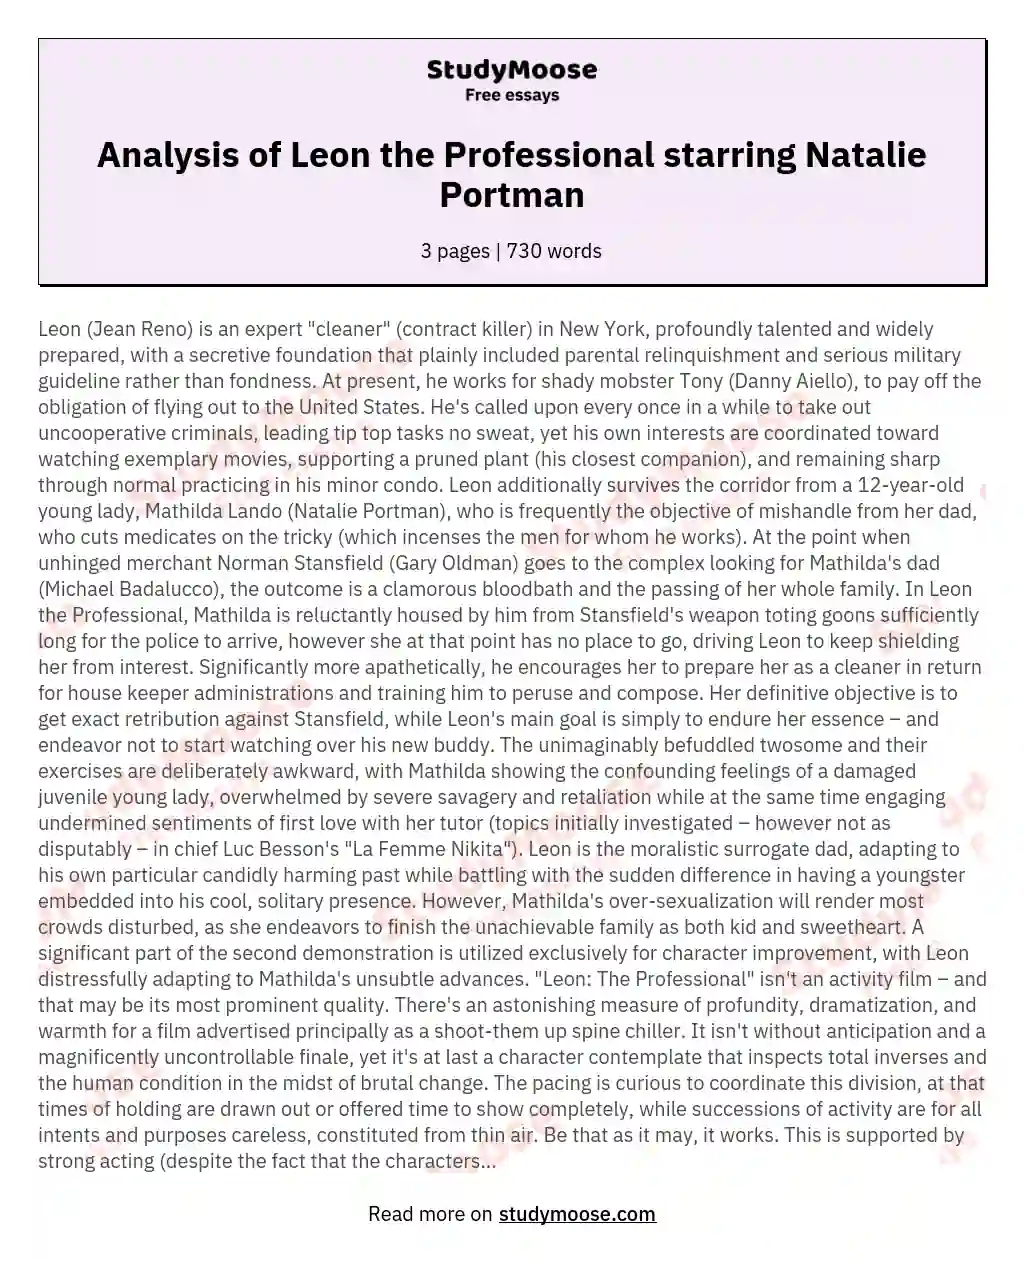 Analysis of Leon the Professional starring Natalie Portman